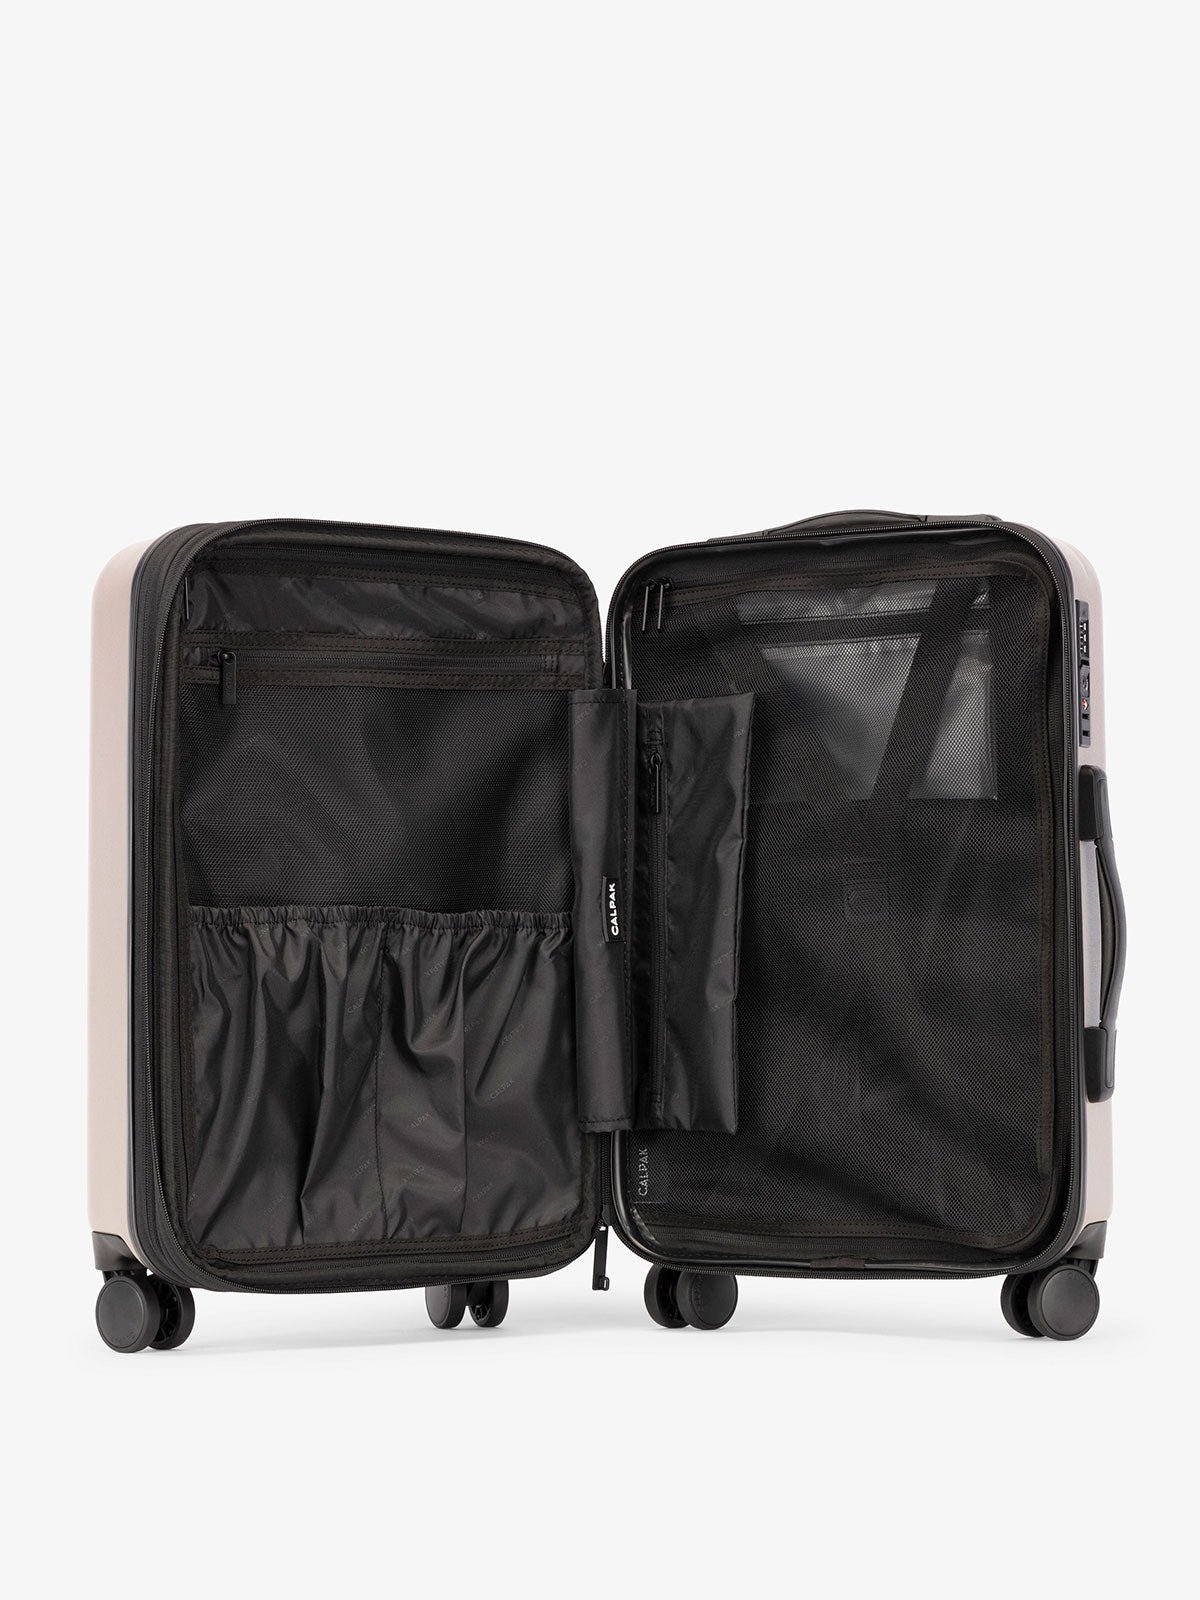 CALPAK Luggage bundle interior compartments in brown chocolate